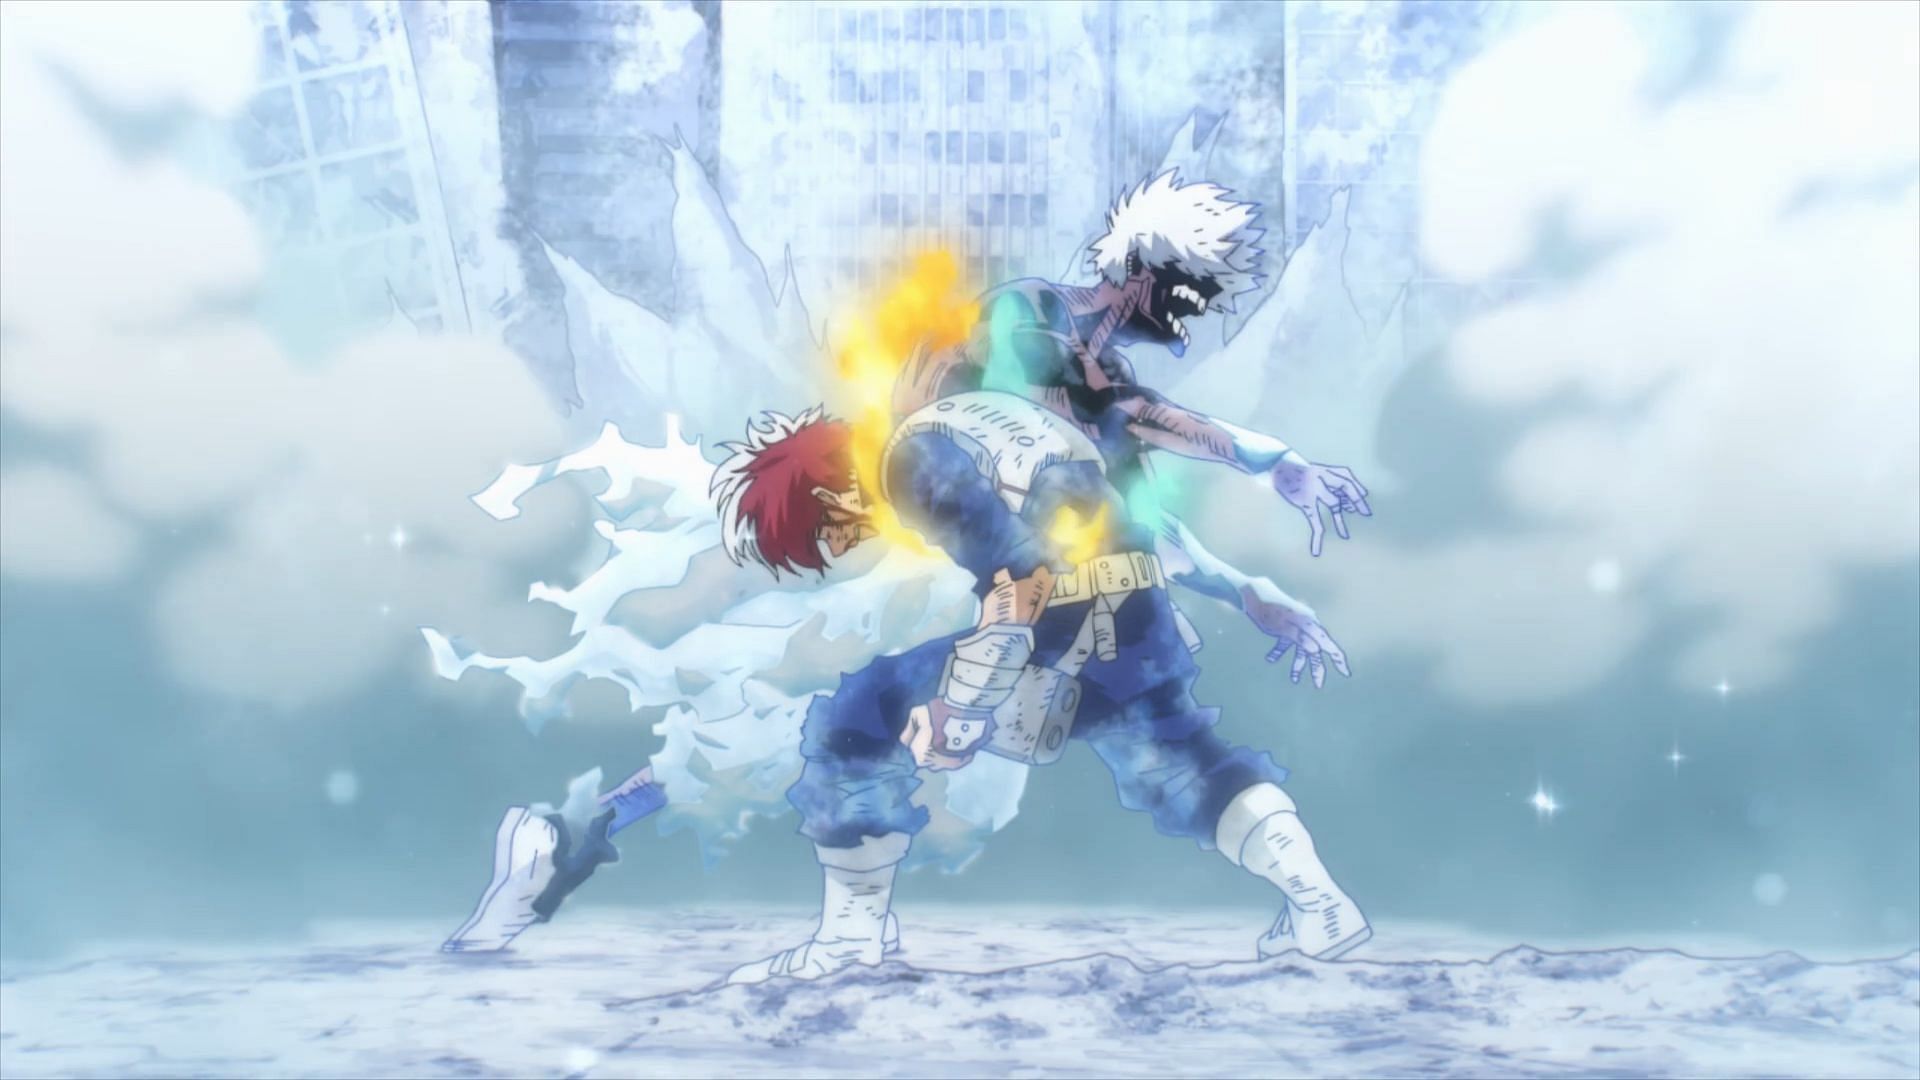 Shoto beats Dabi in My Hero Academia season 7 episode 8 (Image via Bones)